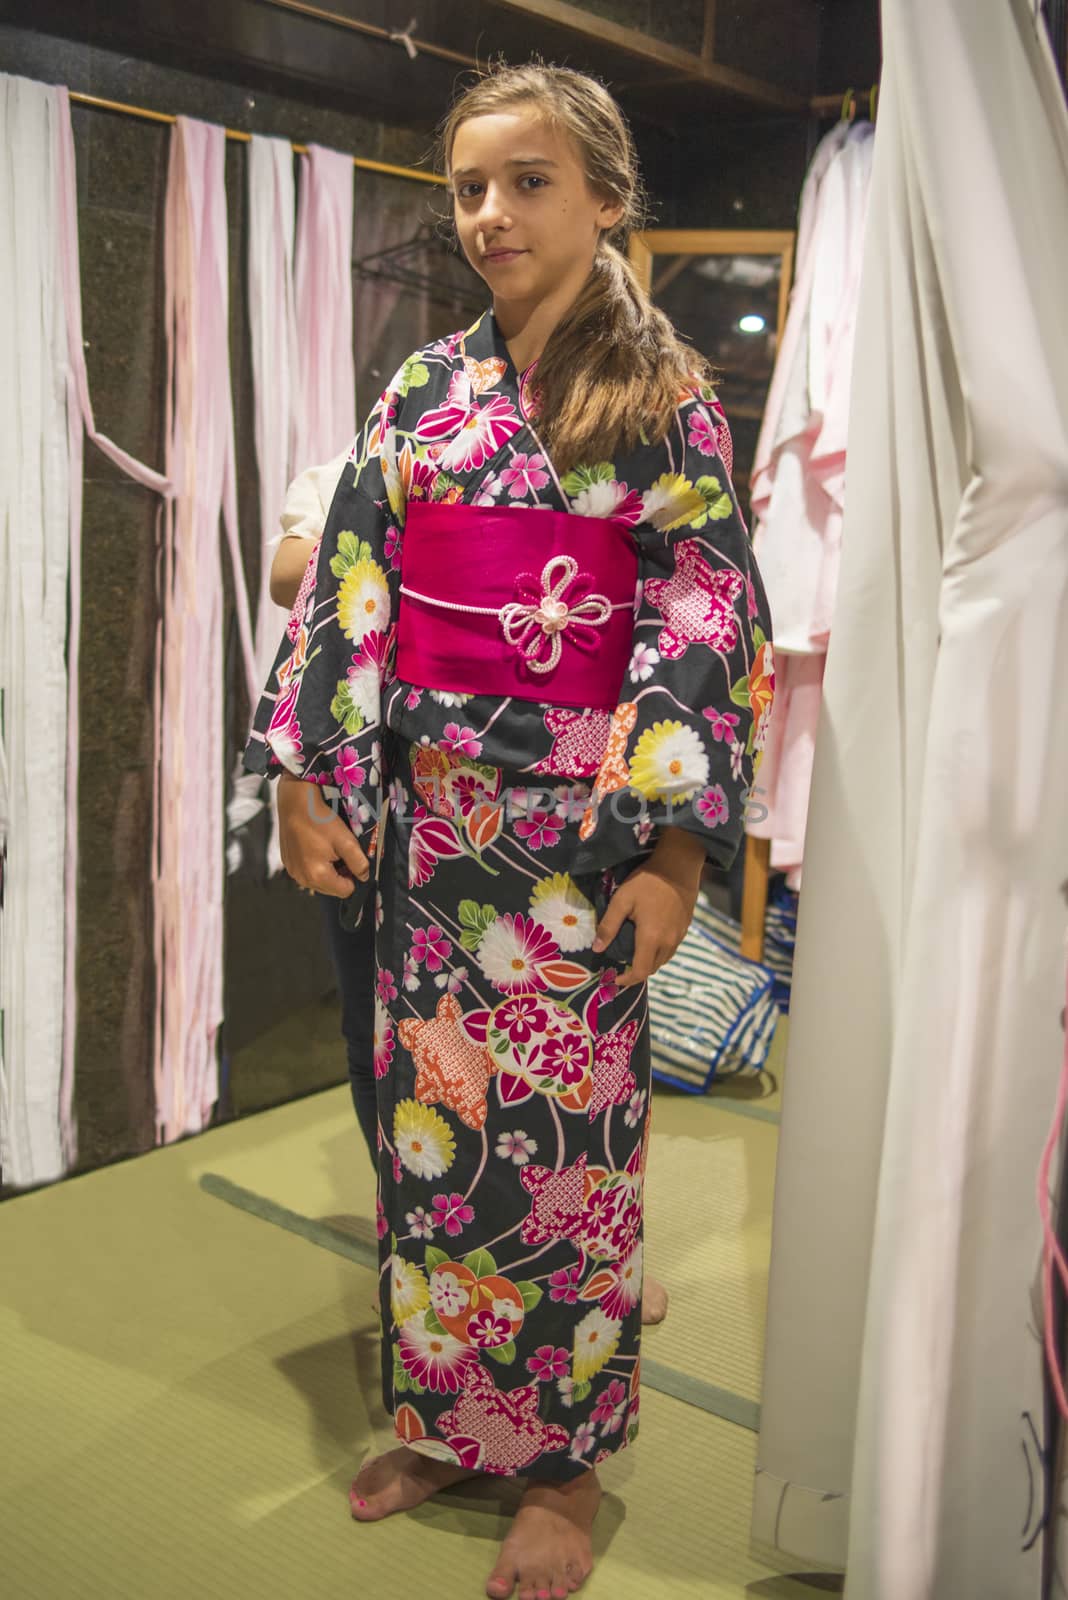 A pretty girl in a kimono. Kimono is the traditional dress worn popular in Japan.European girl in kimono.Portrait of girl wearing japanese traditional kimono .